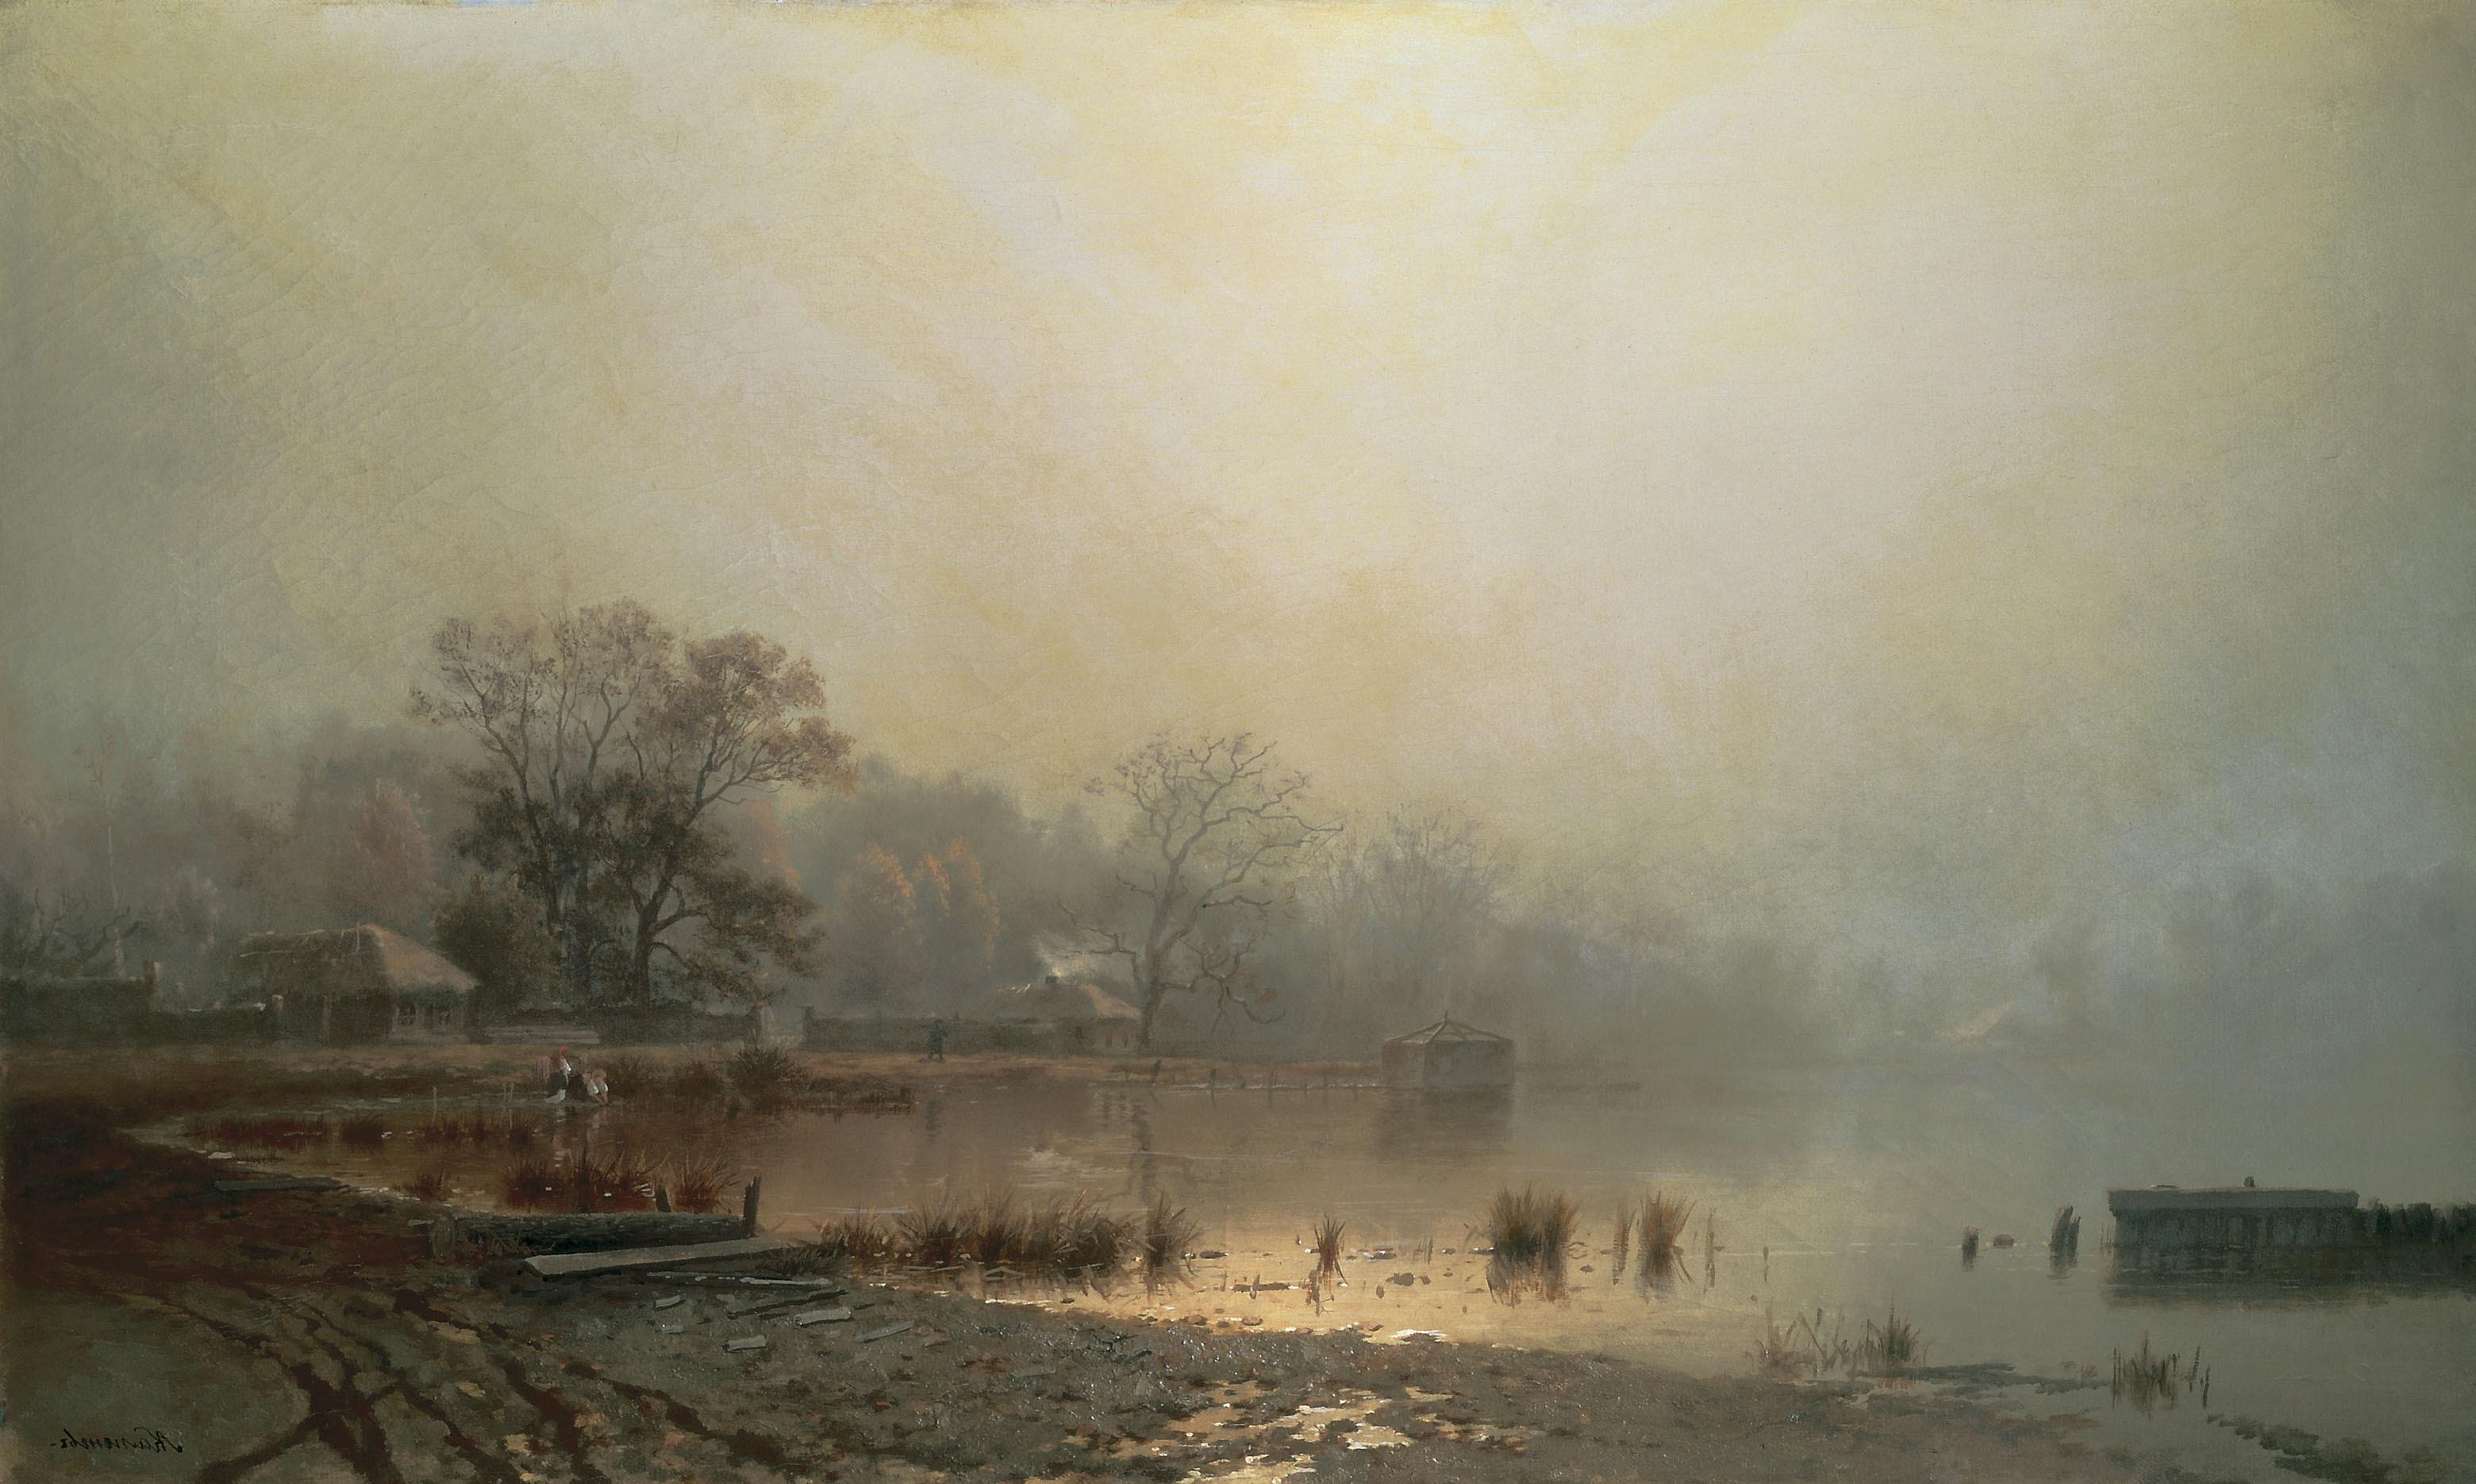 Mist Painting Lake Wallpaper